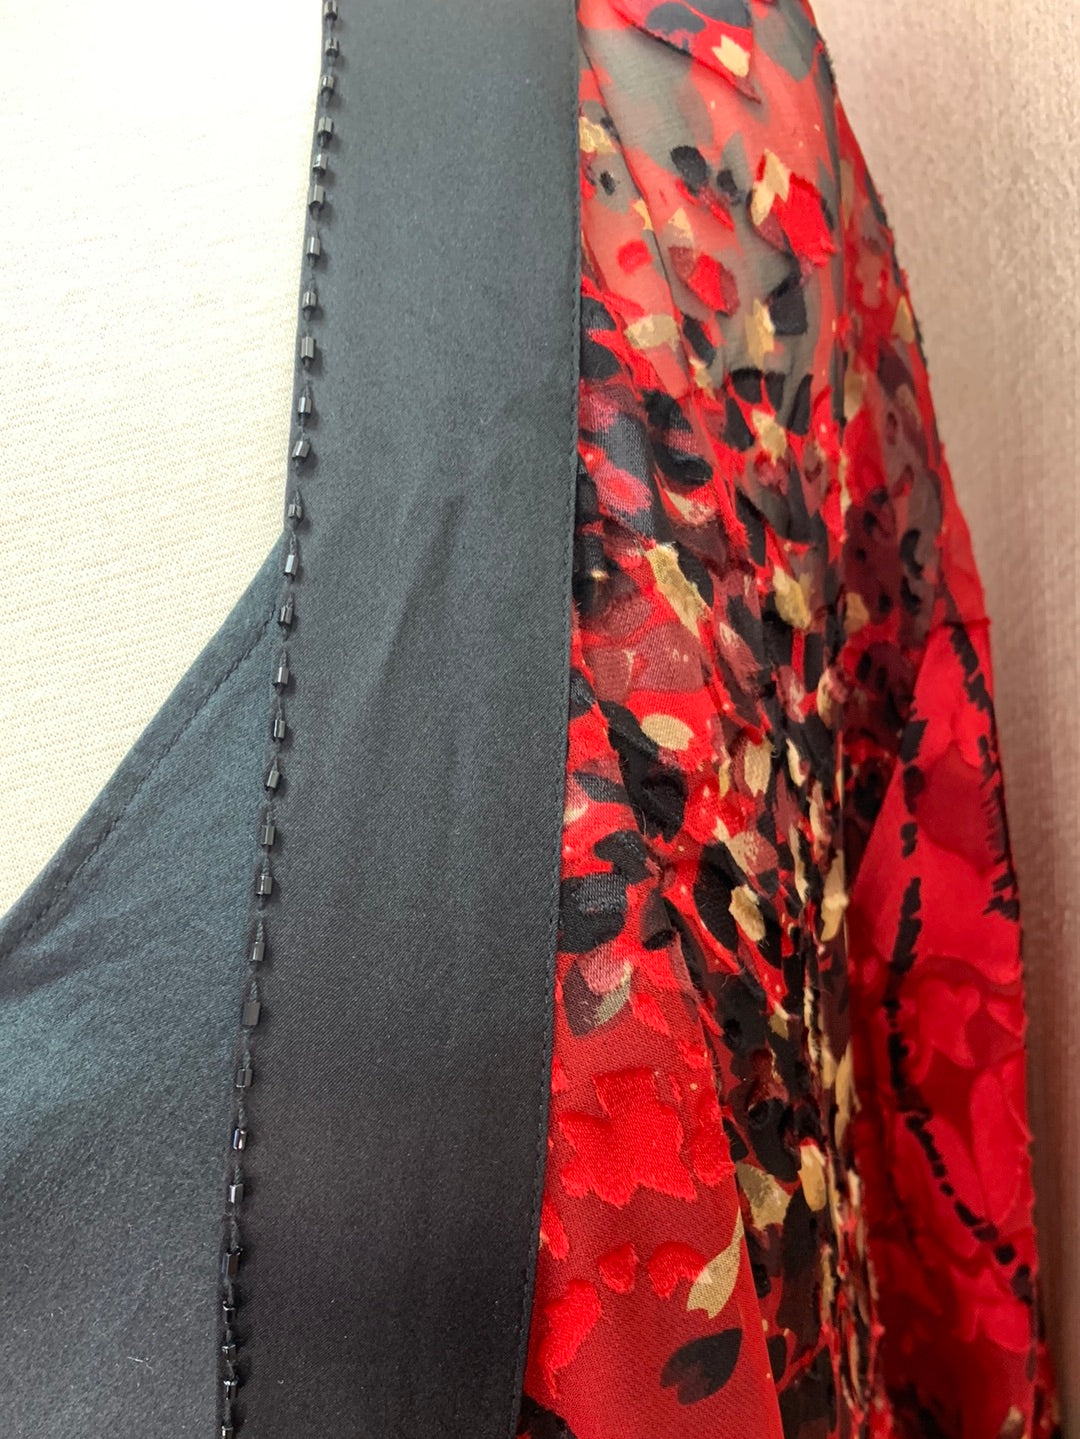 SIMPLY SILK red black Open Front Beaded Cardigan Kimono Jacket - M